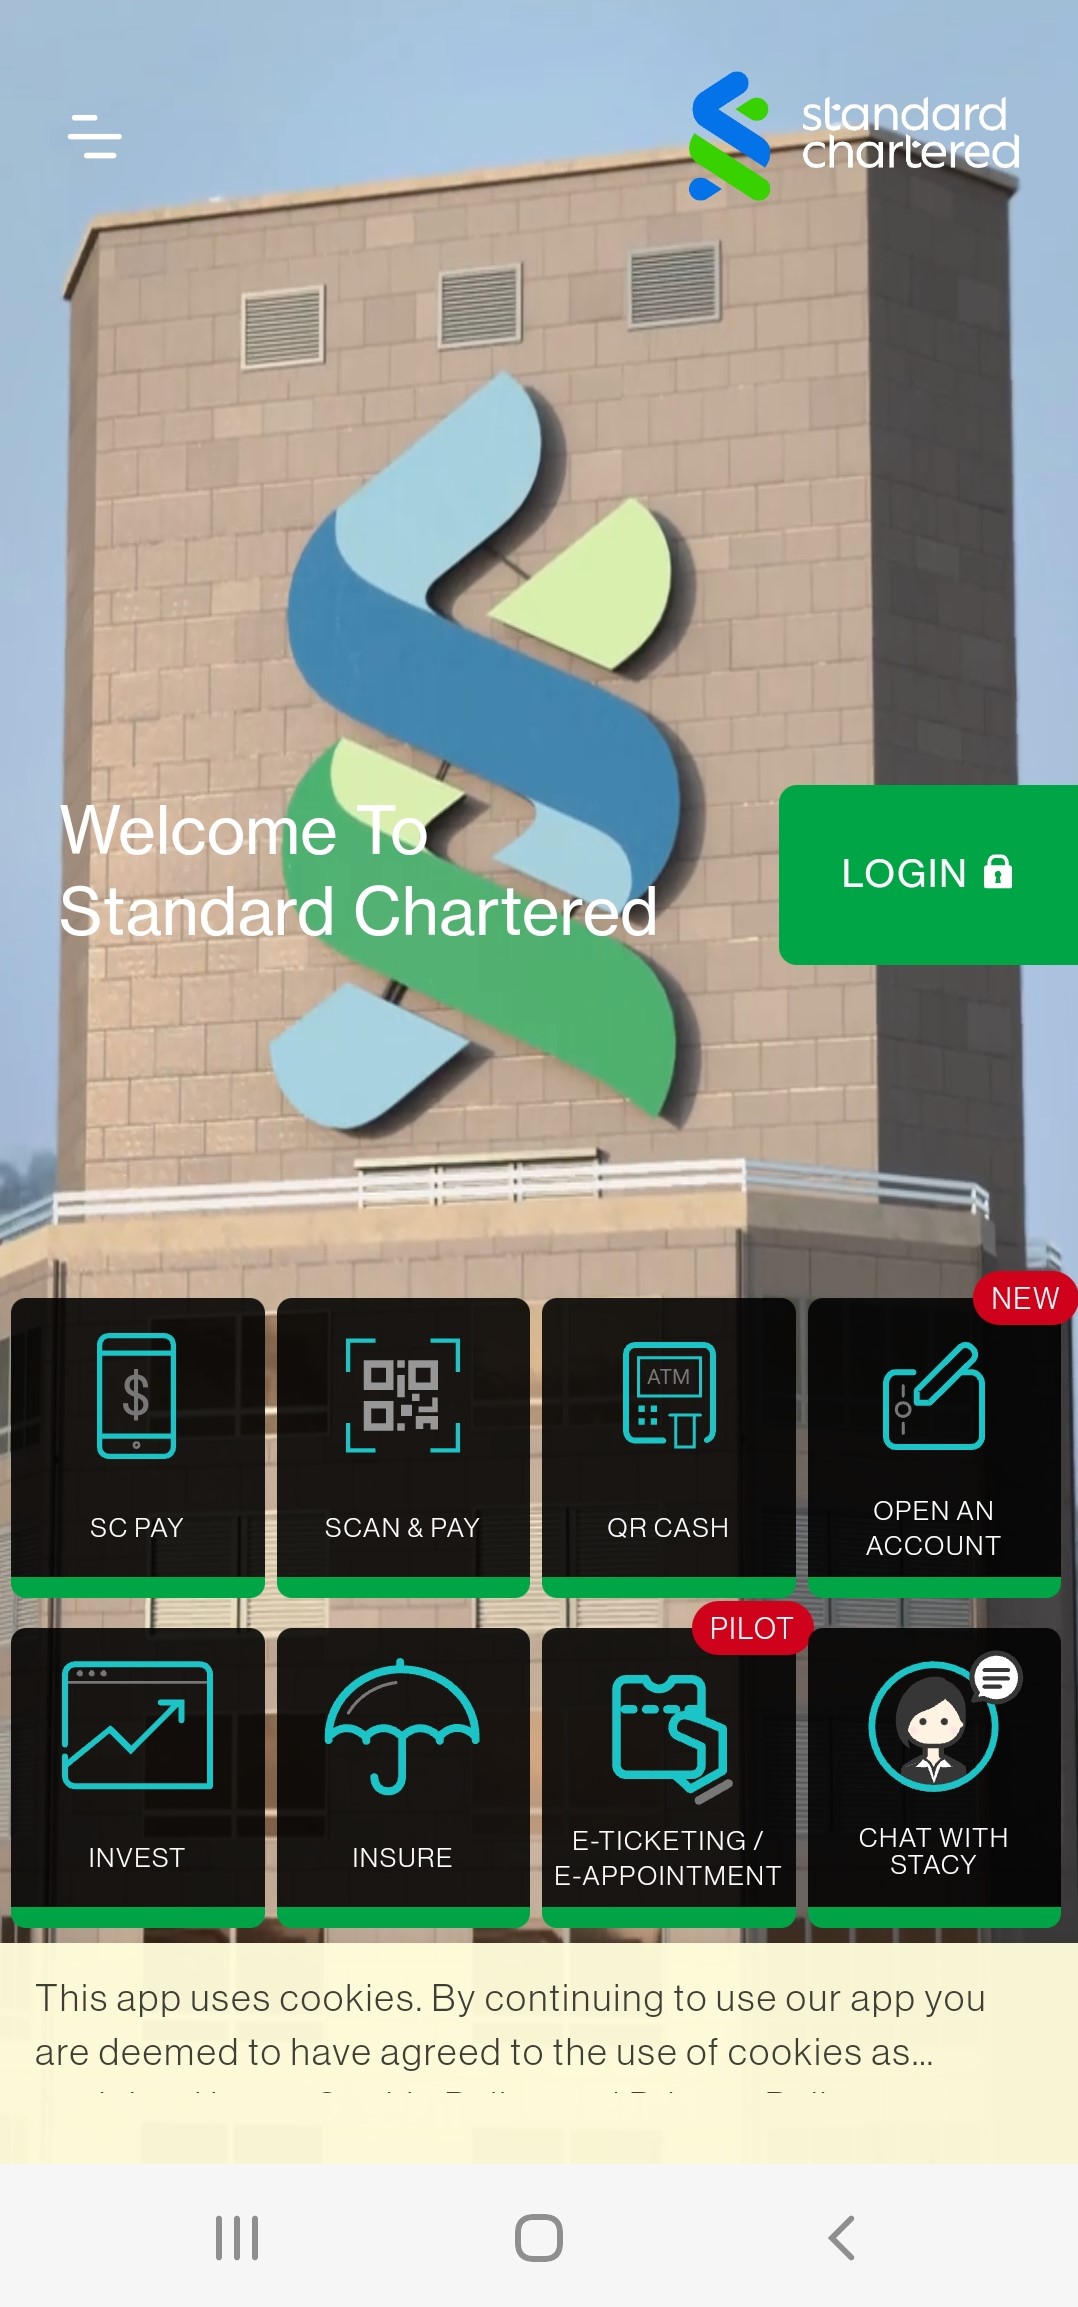 Register Digital Banking account via SC Mobile App Step 1